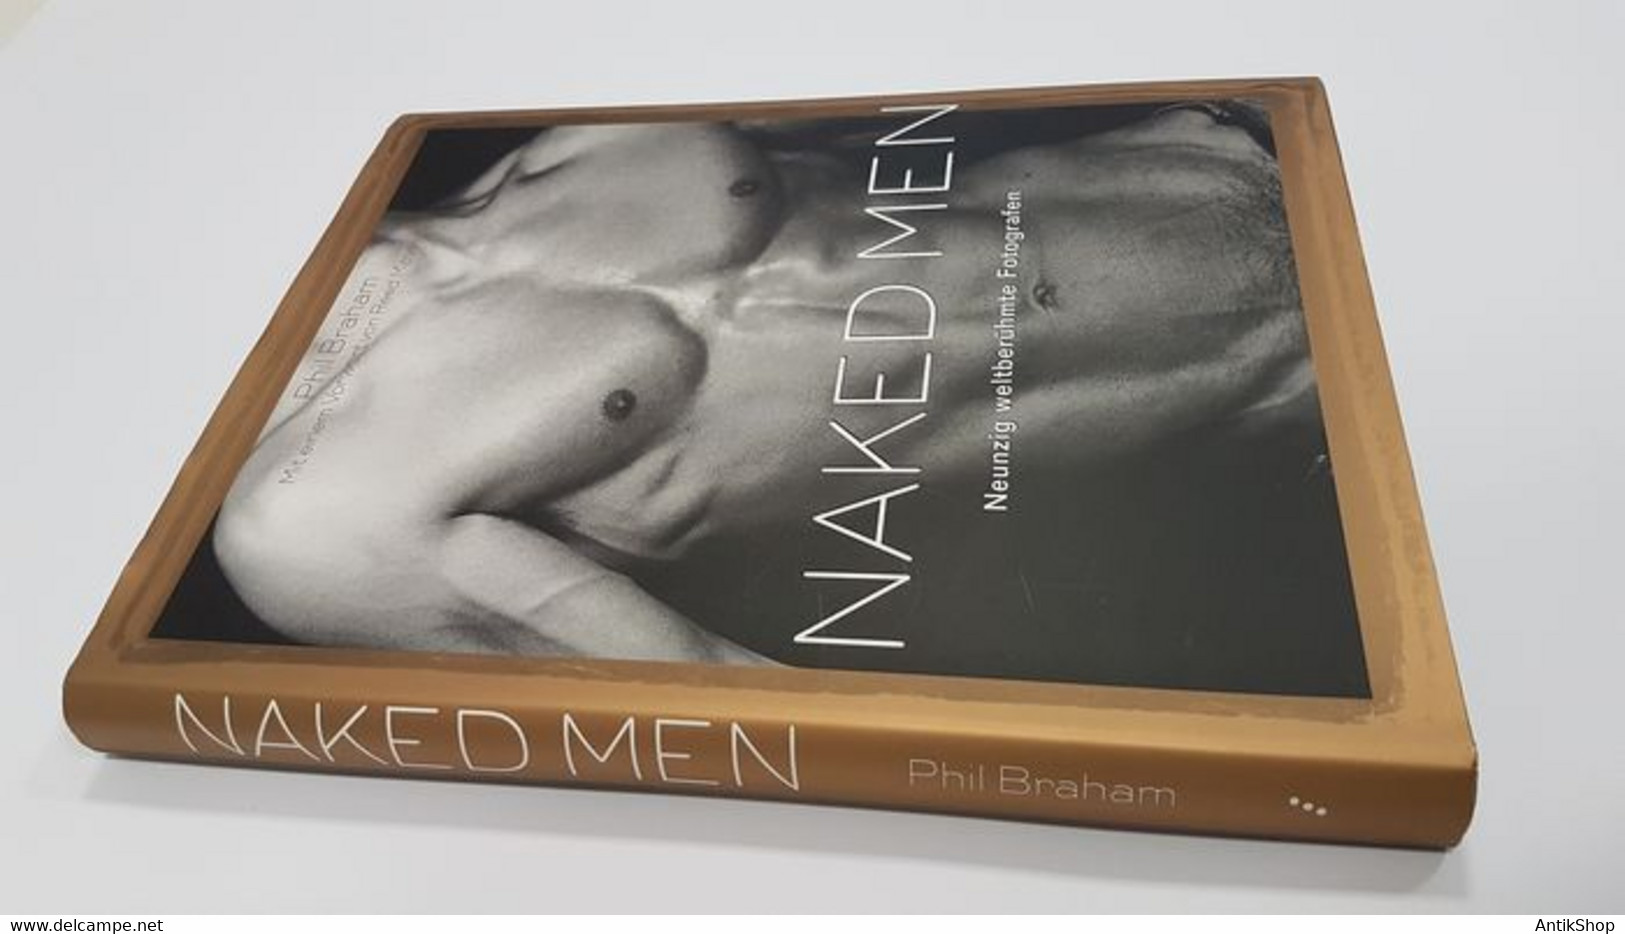 Naked Men. Neunzig Weltberühmte Fotografen Ed. By Phil Braham. Gay Erotica Curiosa - Schone Kunsten